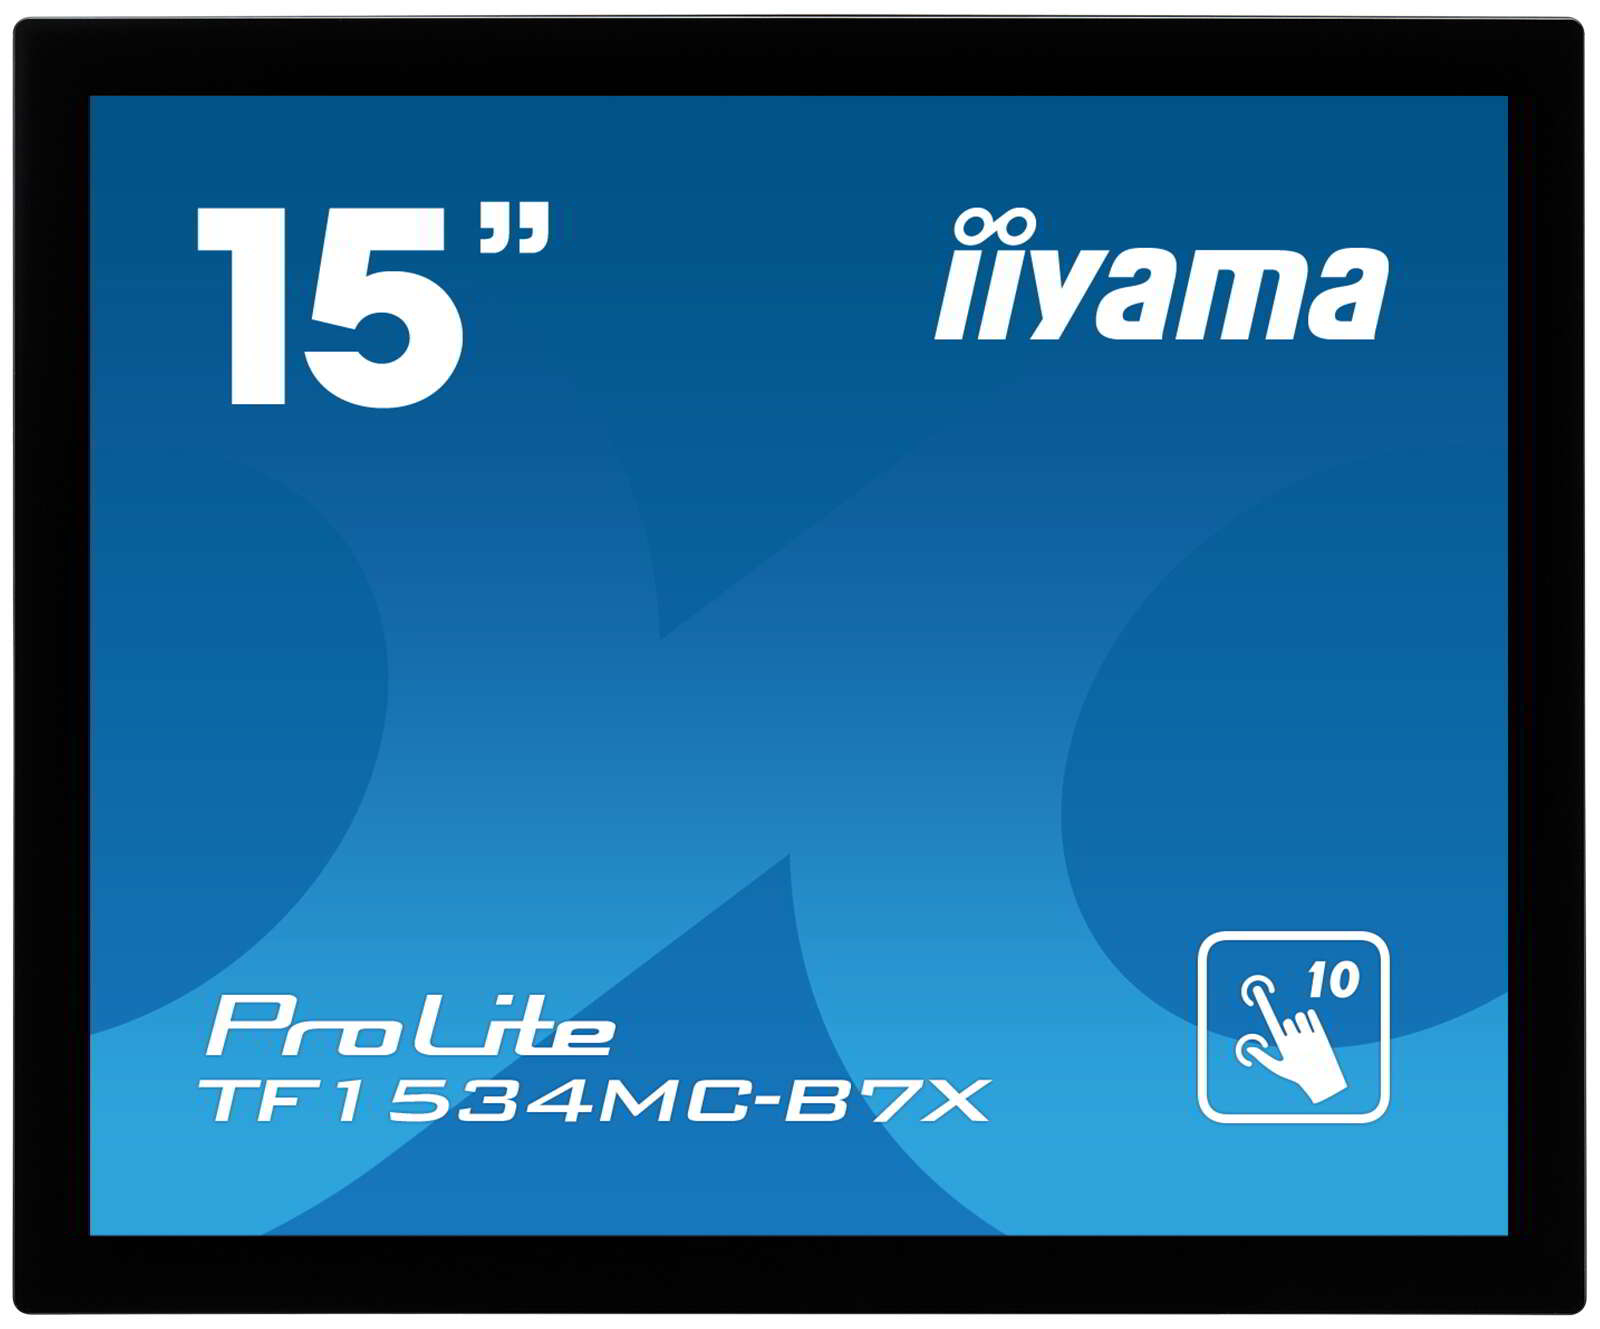 Iiyama 15" tf1534mc-b7x prolite monitor